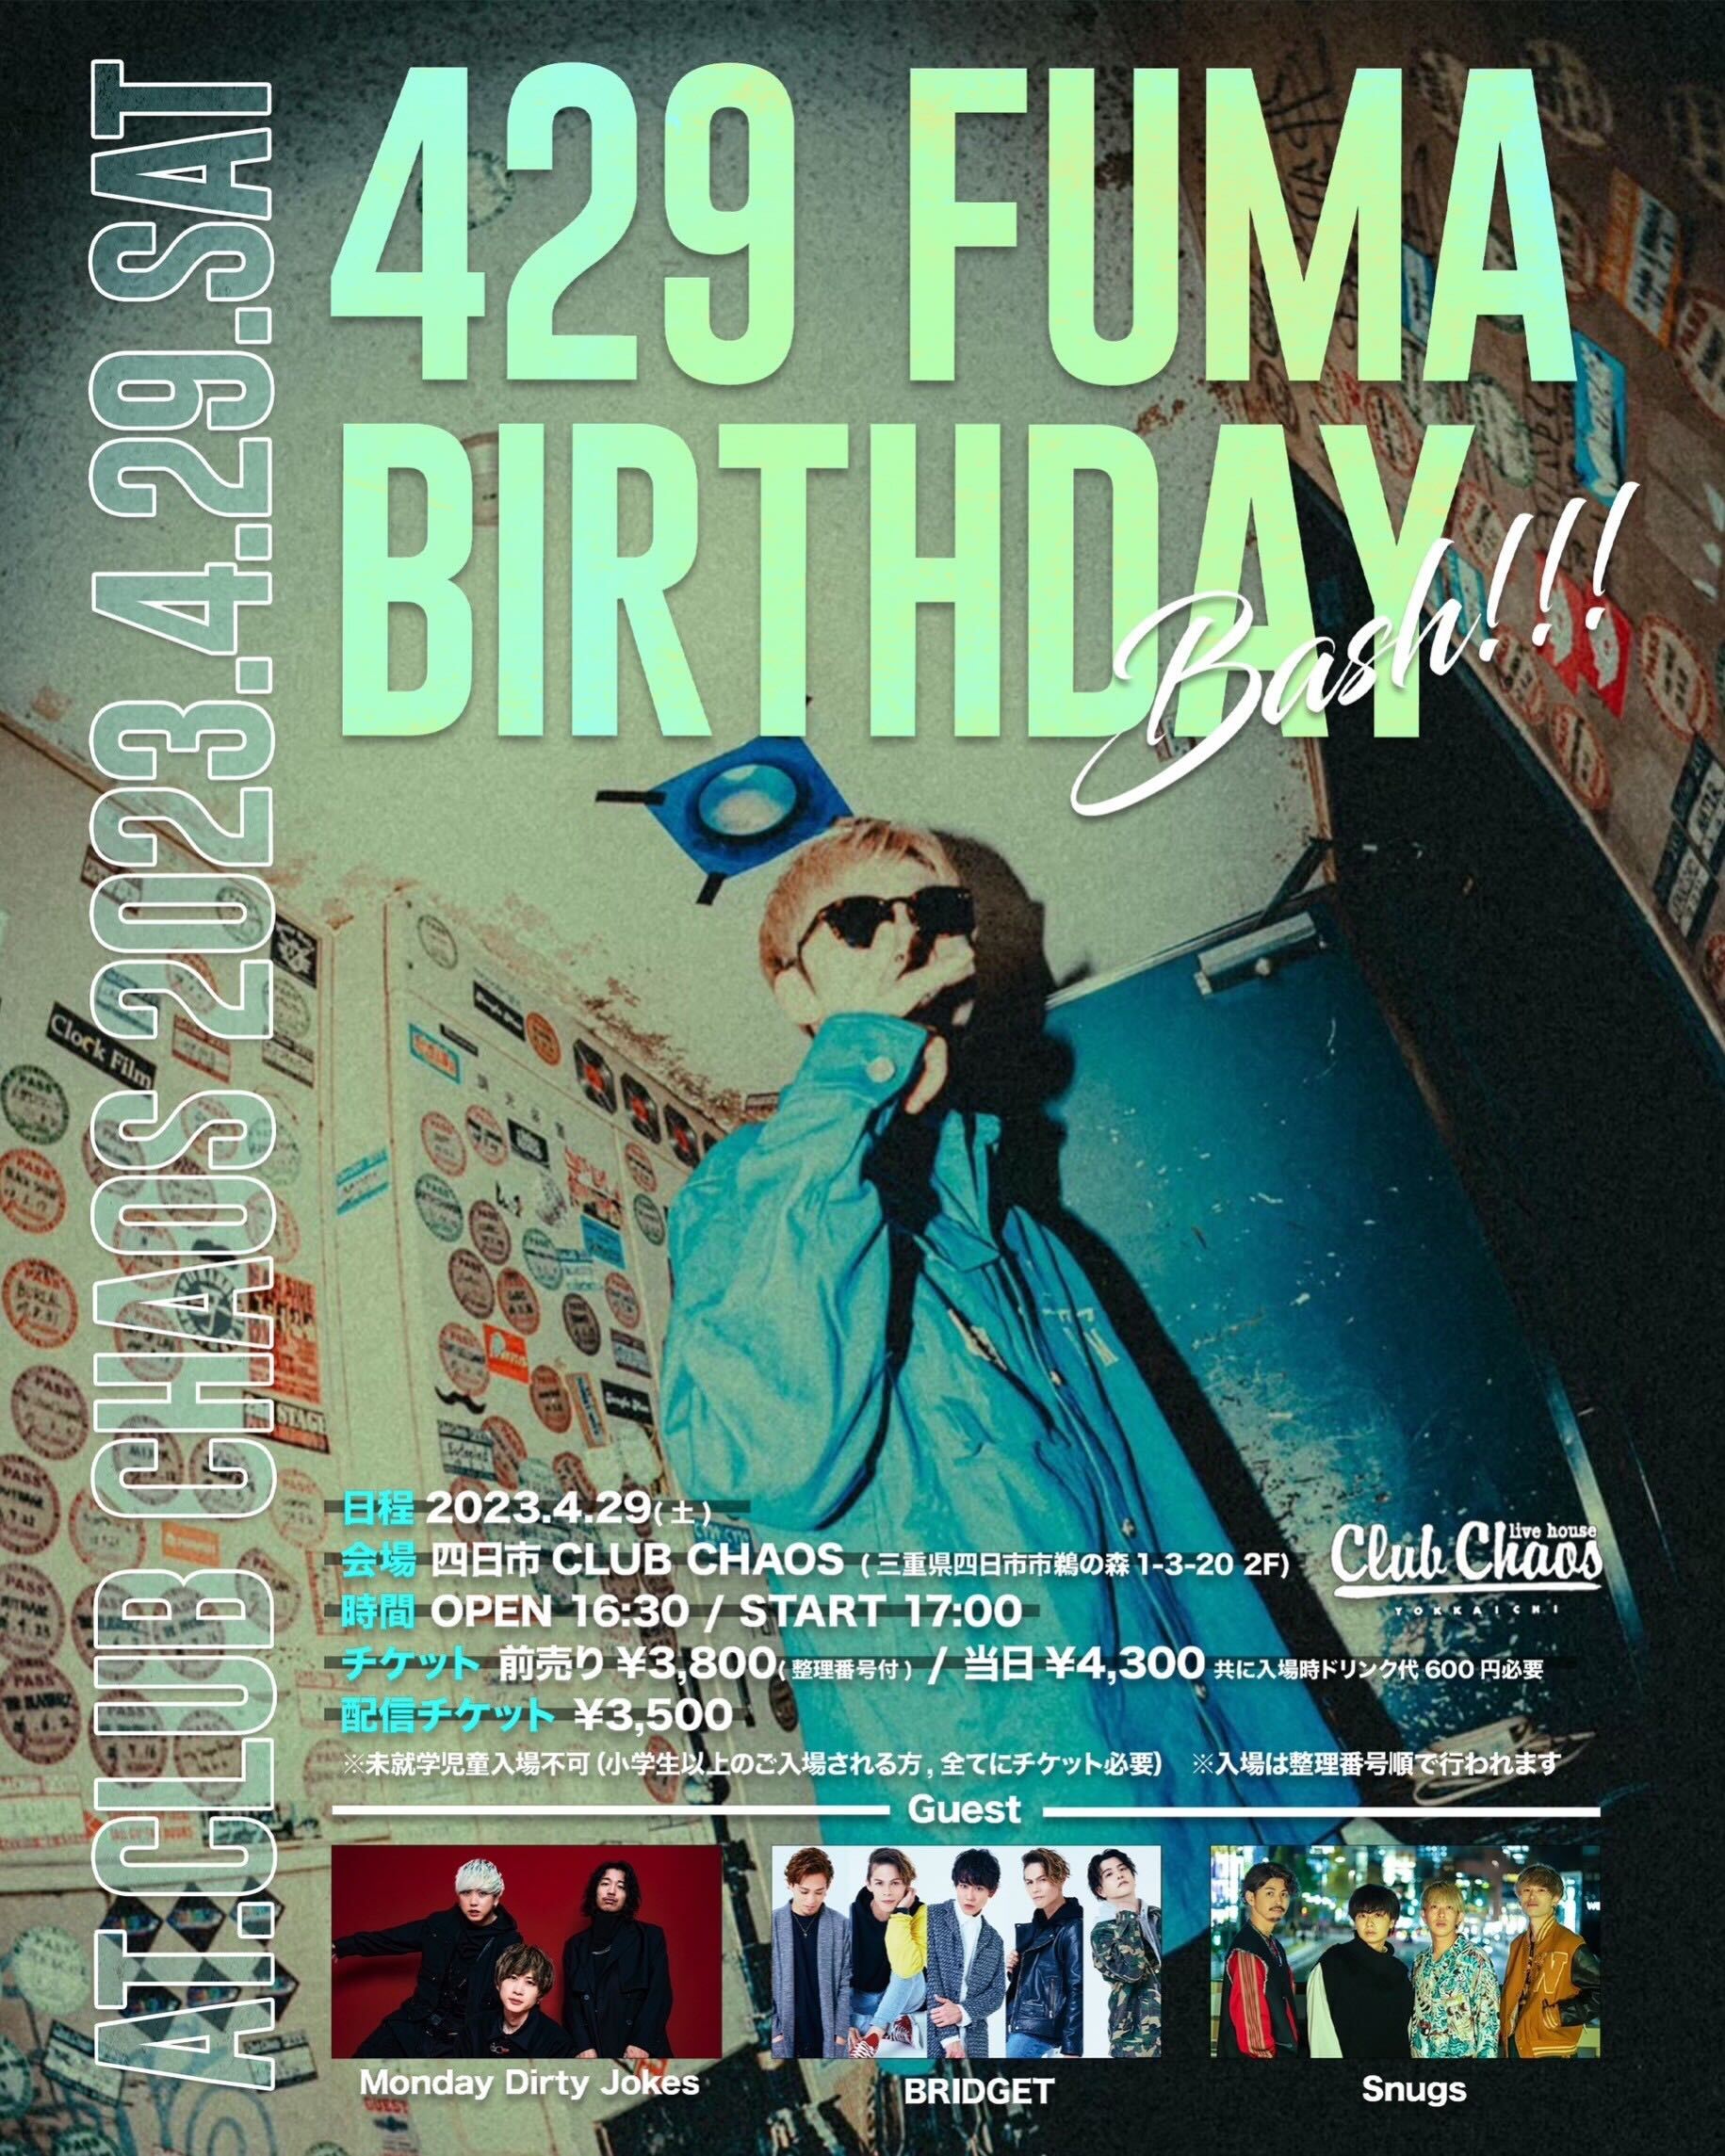 429 FUMA BIRTHDAY BASH!!!